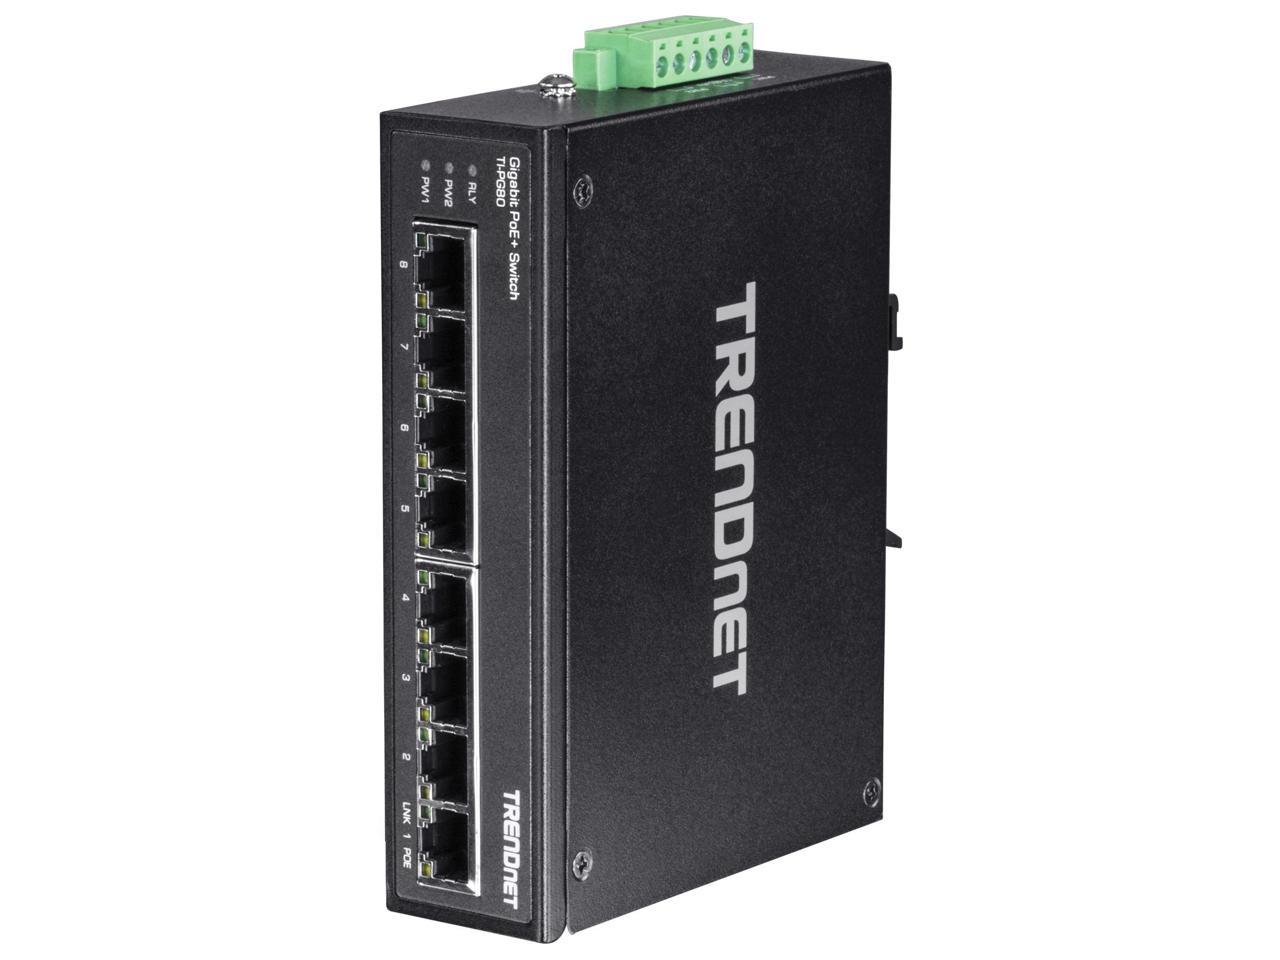 TRENDnet 8-Port Hardened Industrial Gigabit PoE+ DIN-Rail Switch Limited Lifetime Warranty